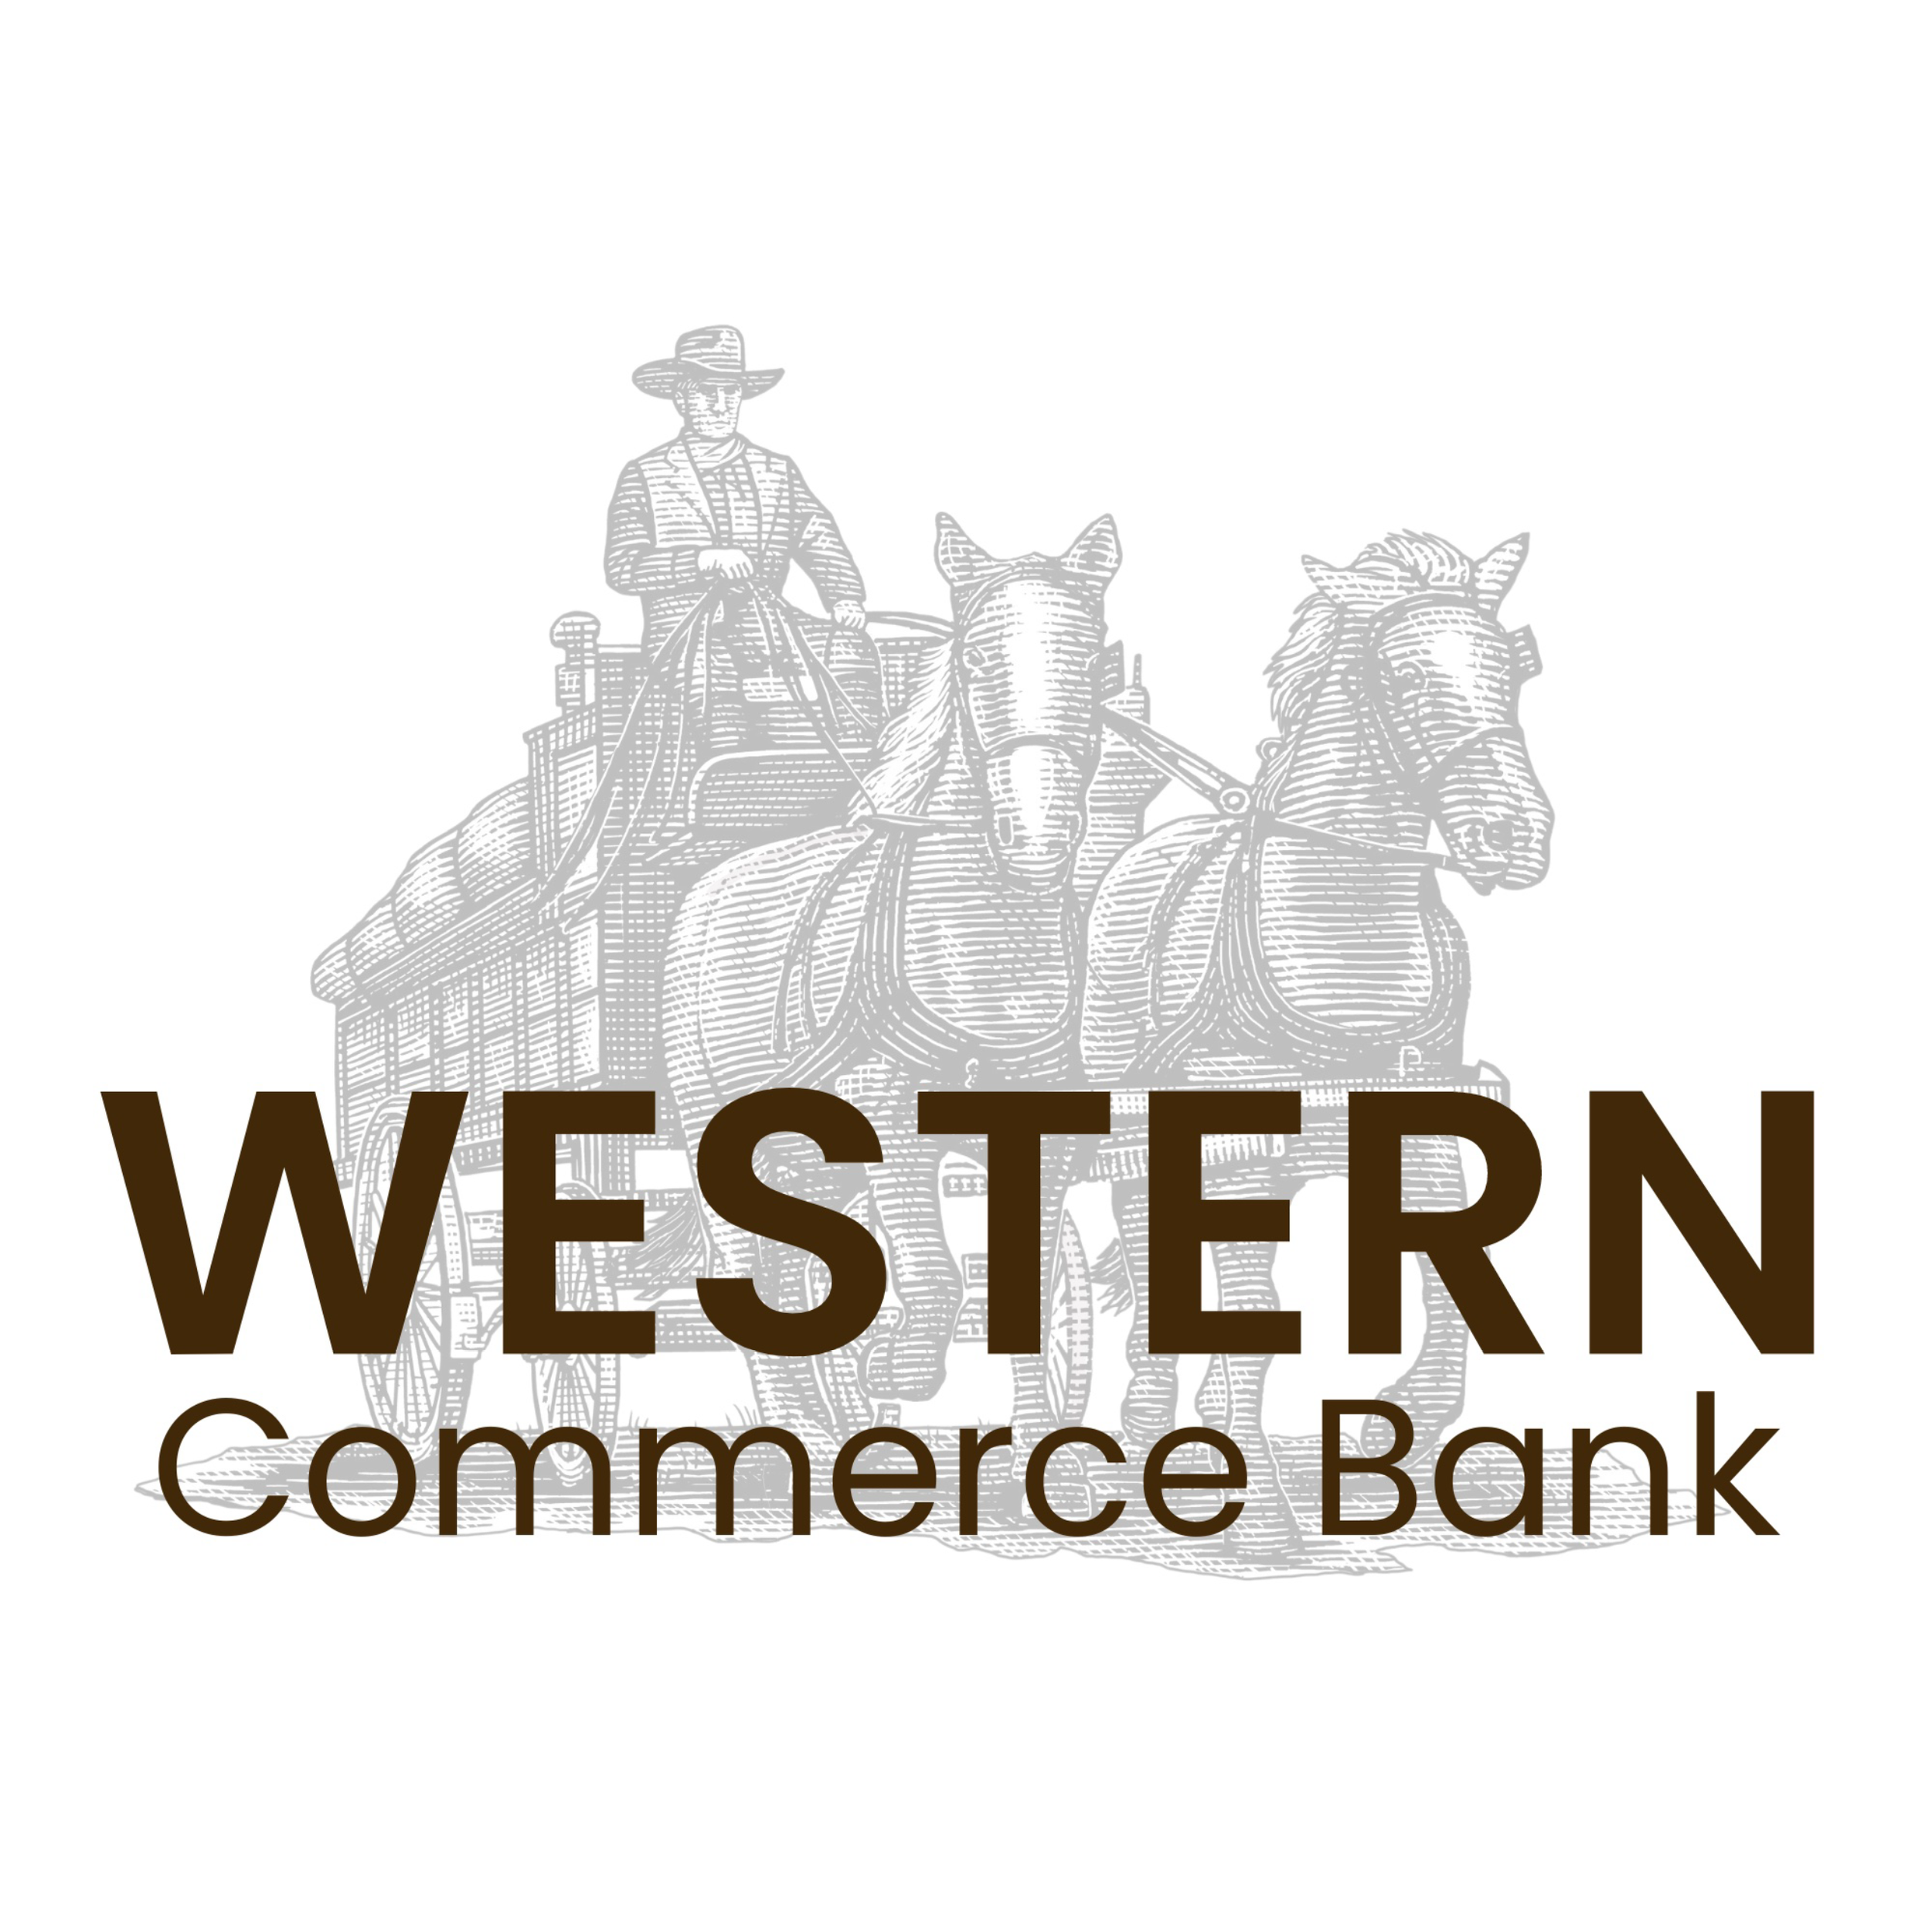 Western Commerce Bank Logo.png